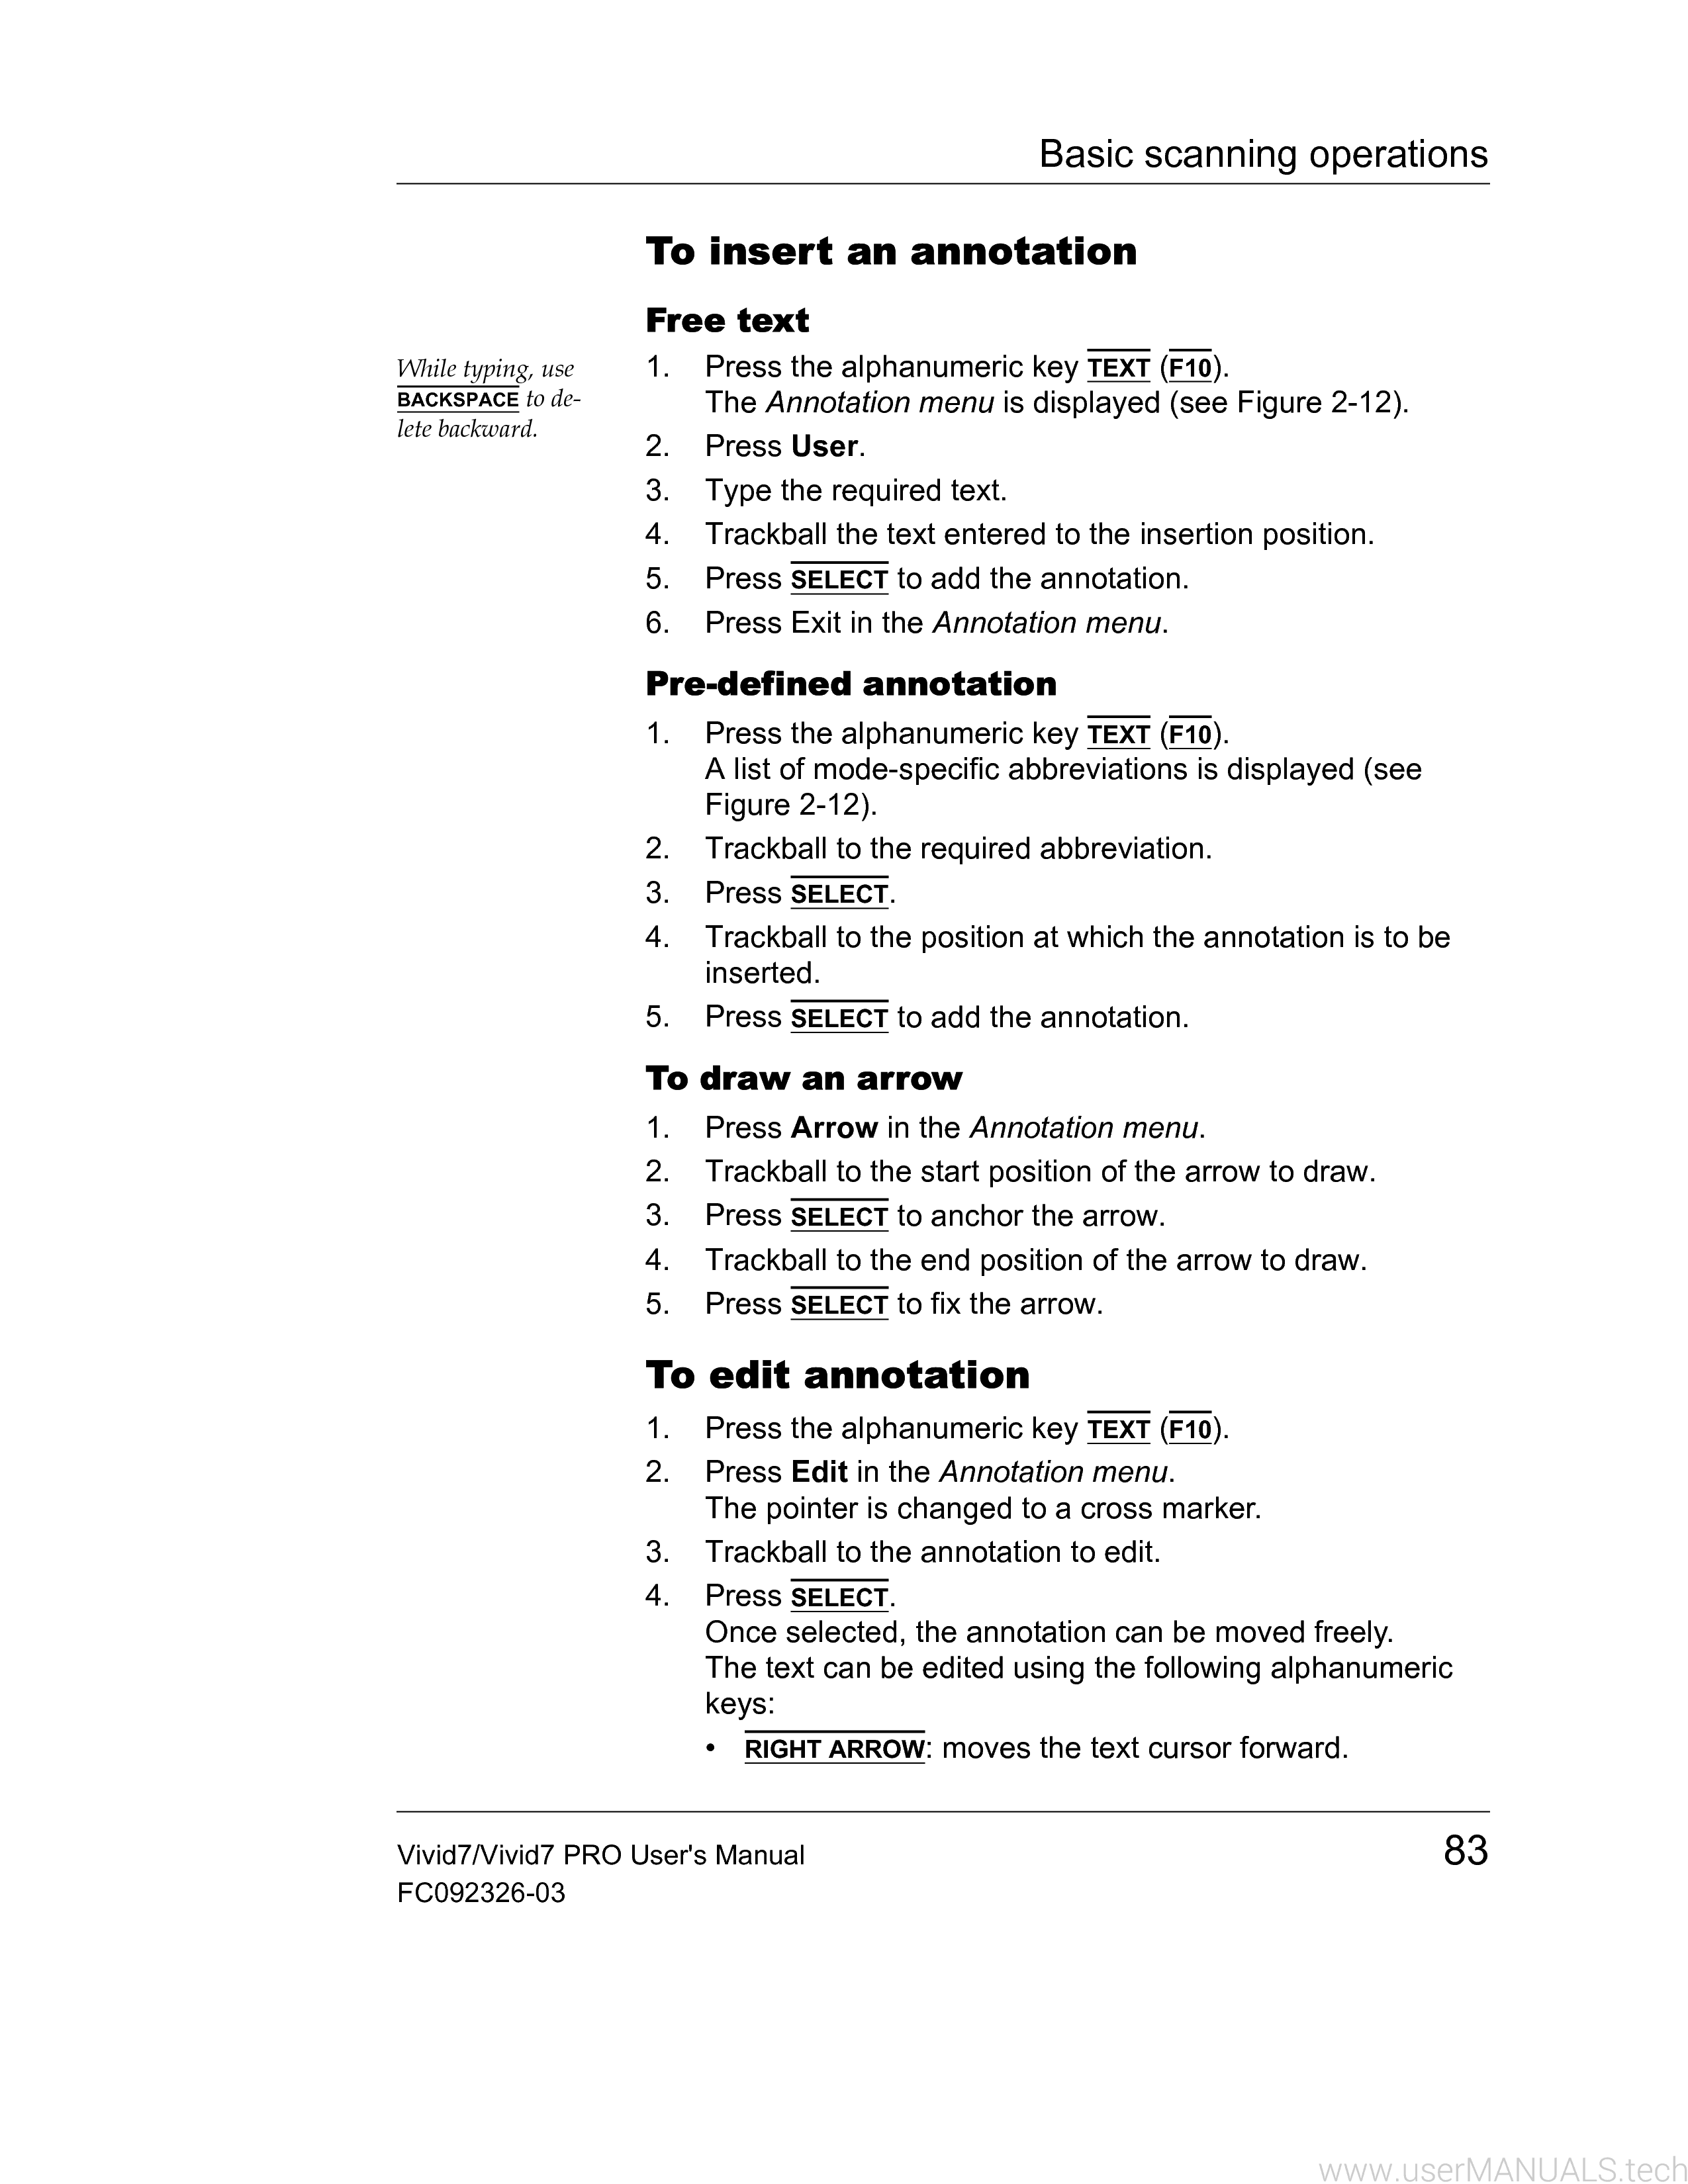 GE Vivid 7 User Manual, Page: 10